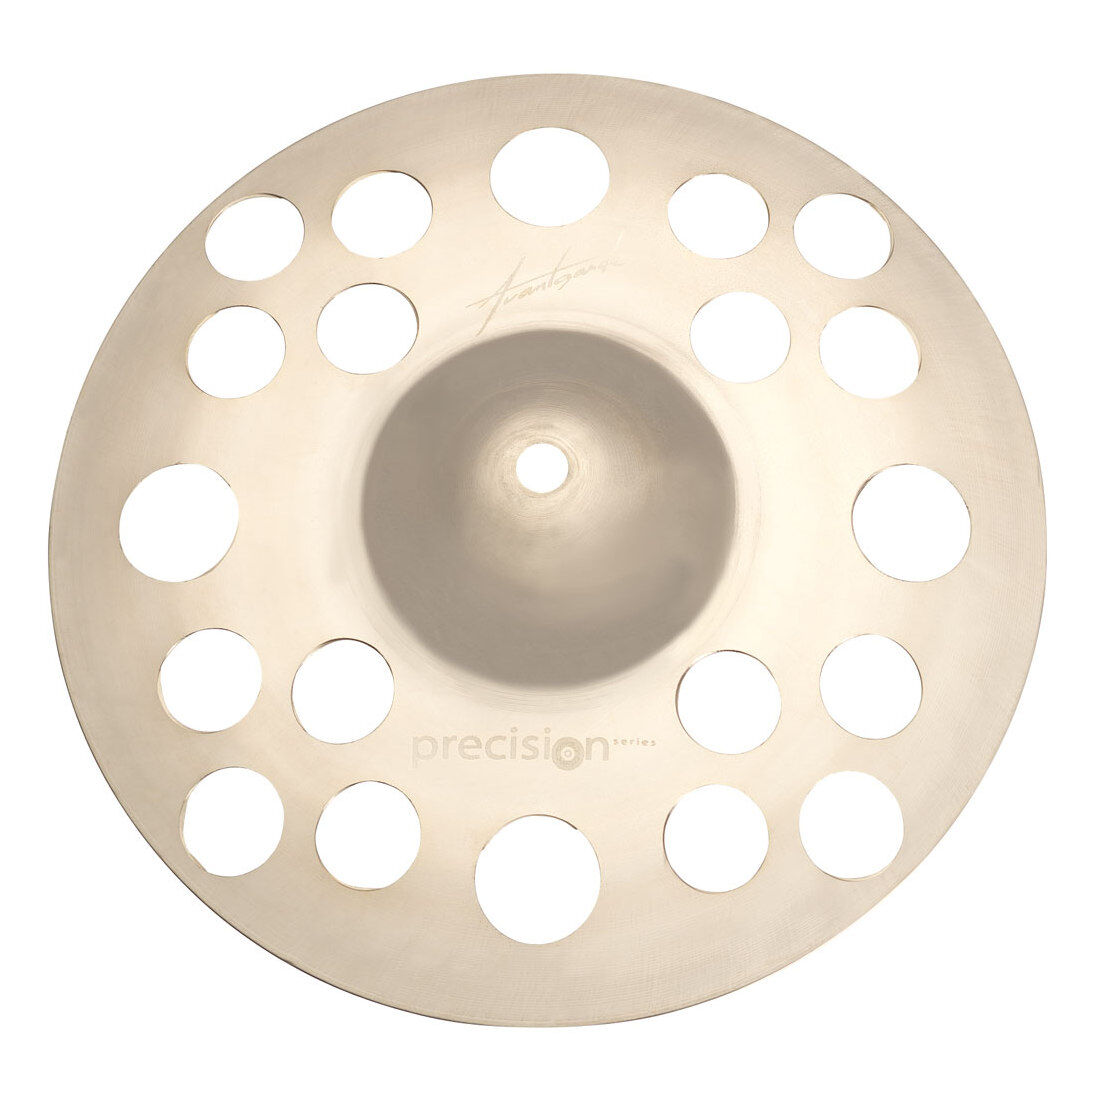 Avantgarde Precision EFX 12" splash cymbal